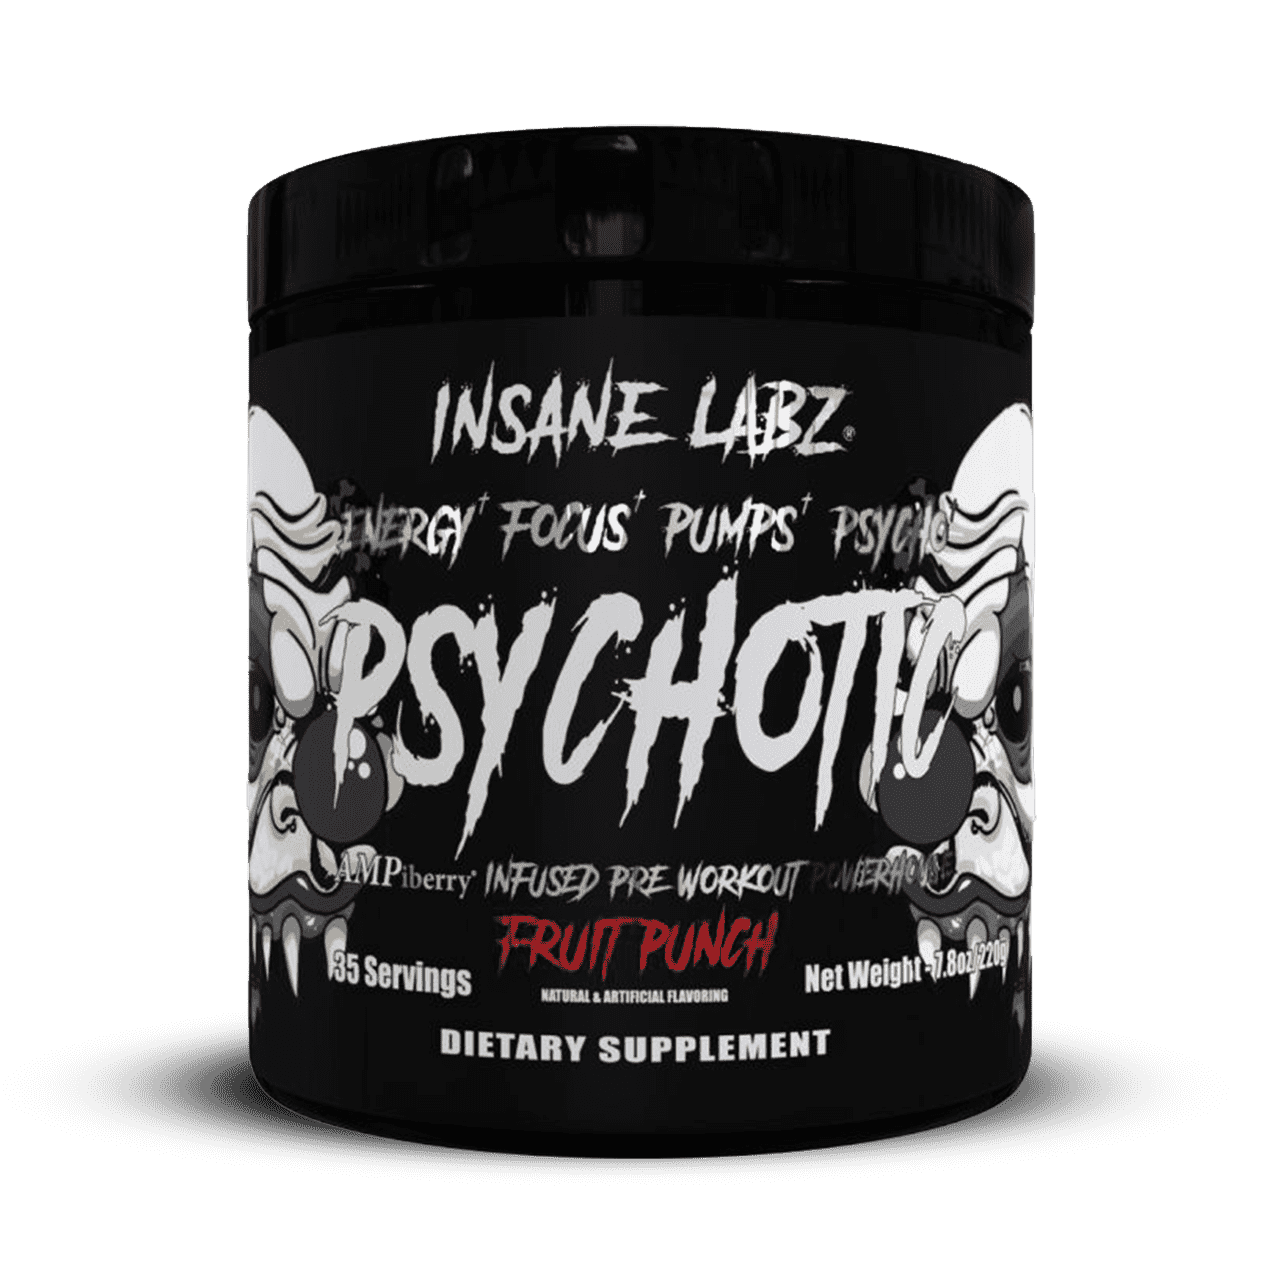 Insane Labz Psychotic fruit punch